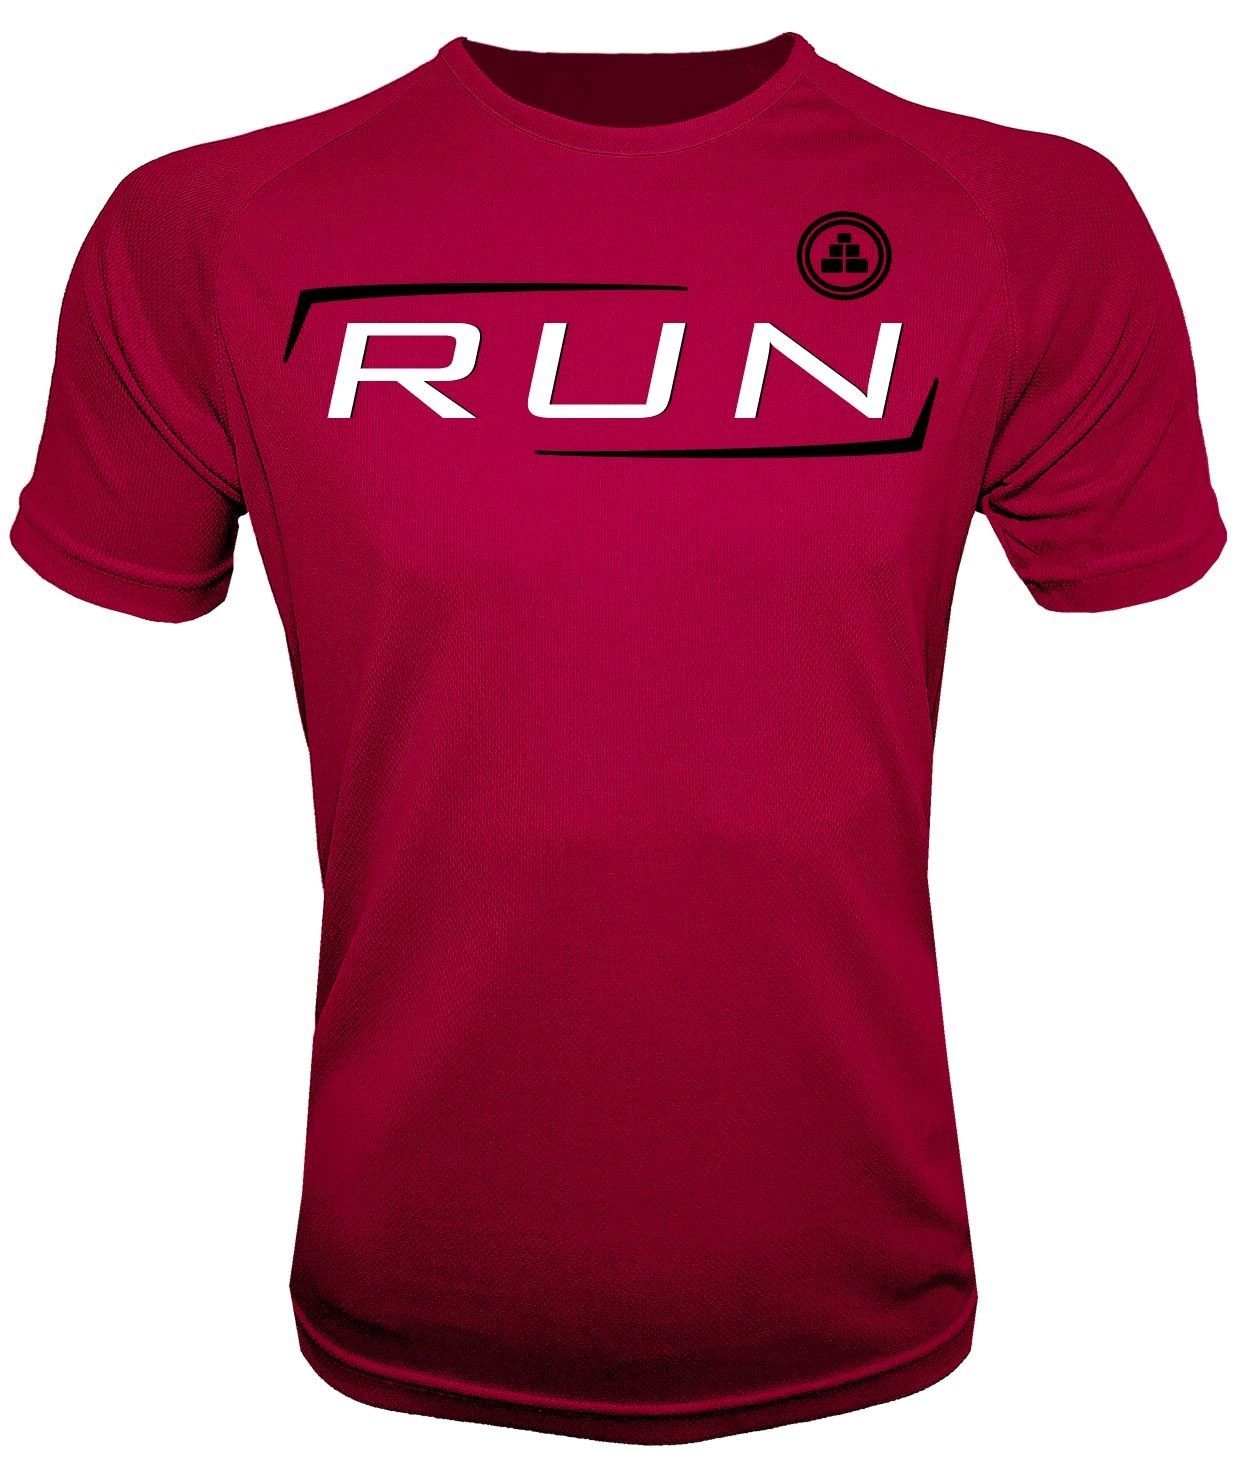 Camiseta de deporte RUN R